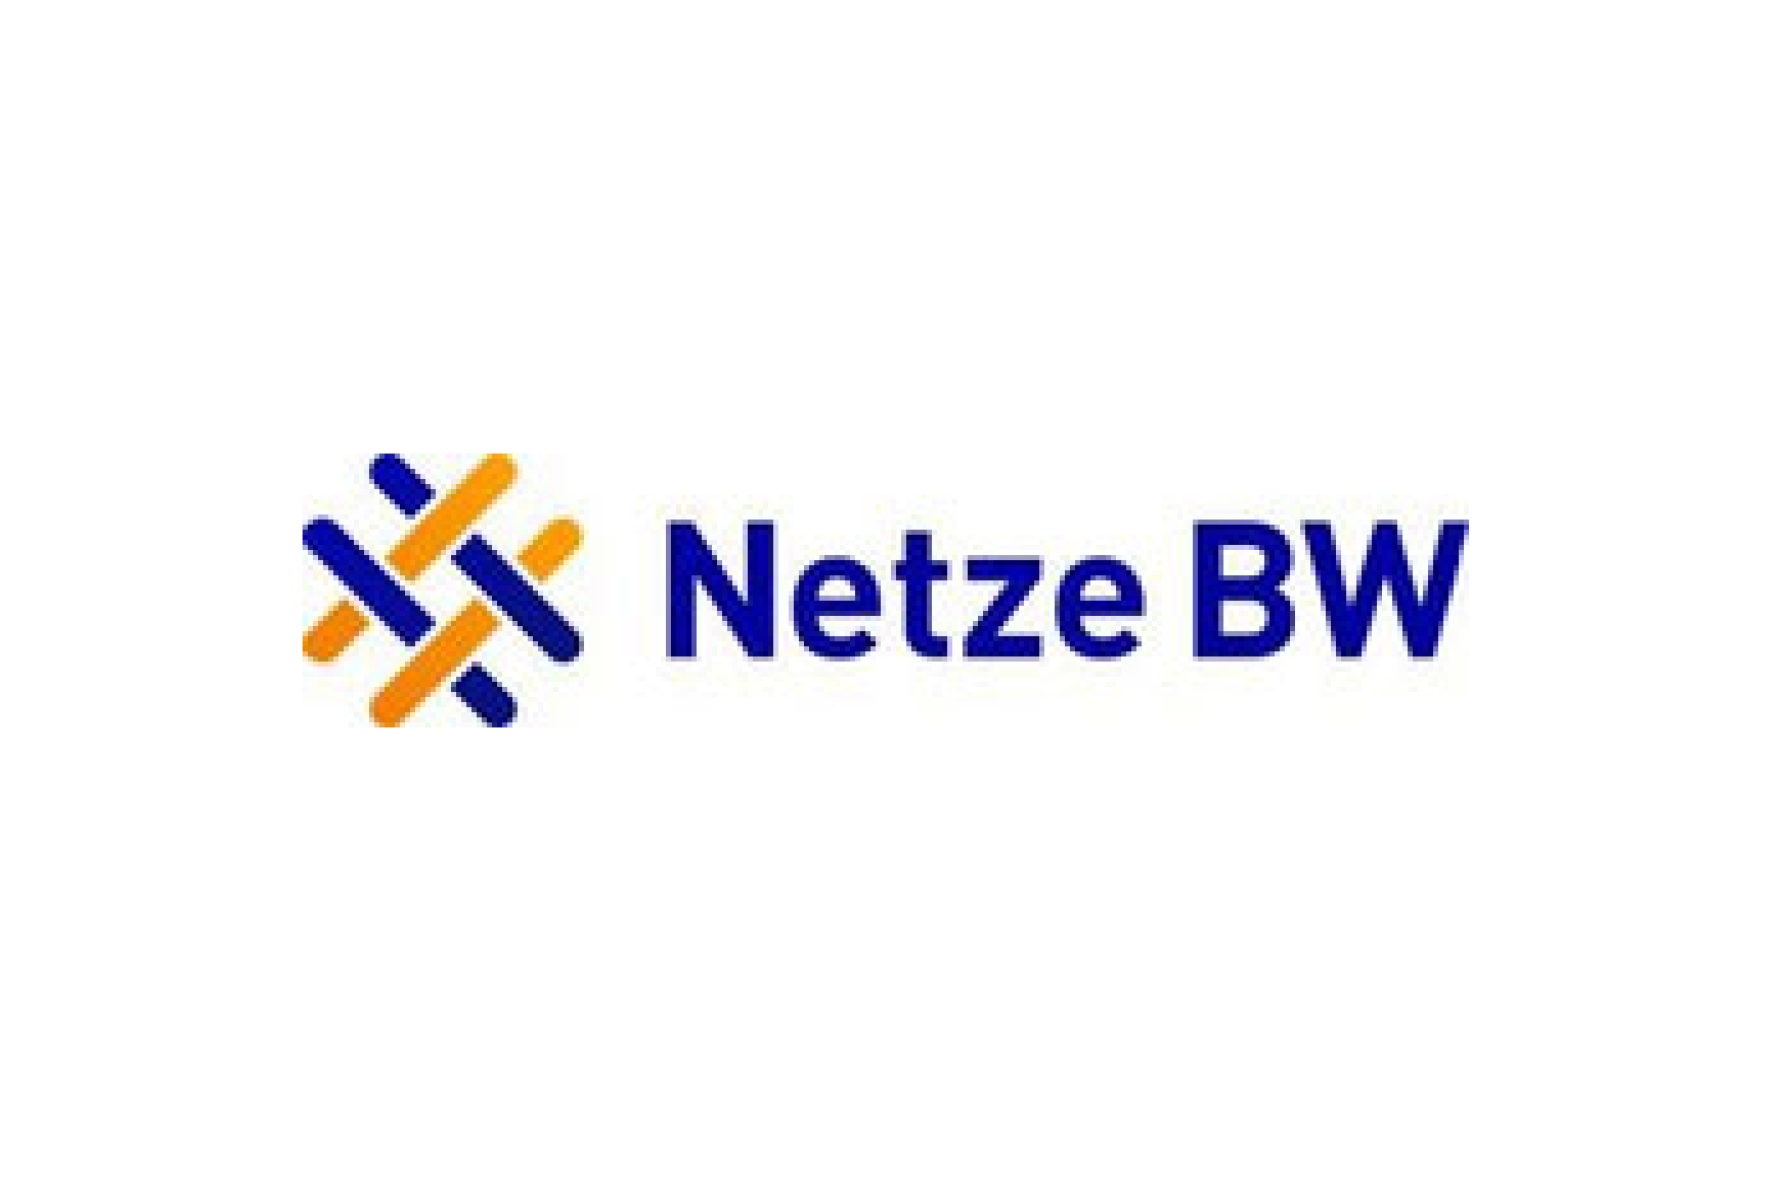 m2g - Netzw BW